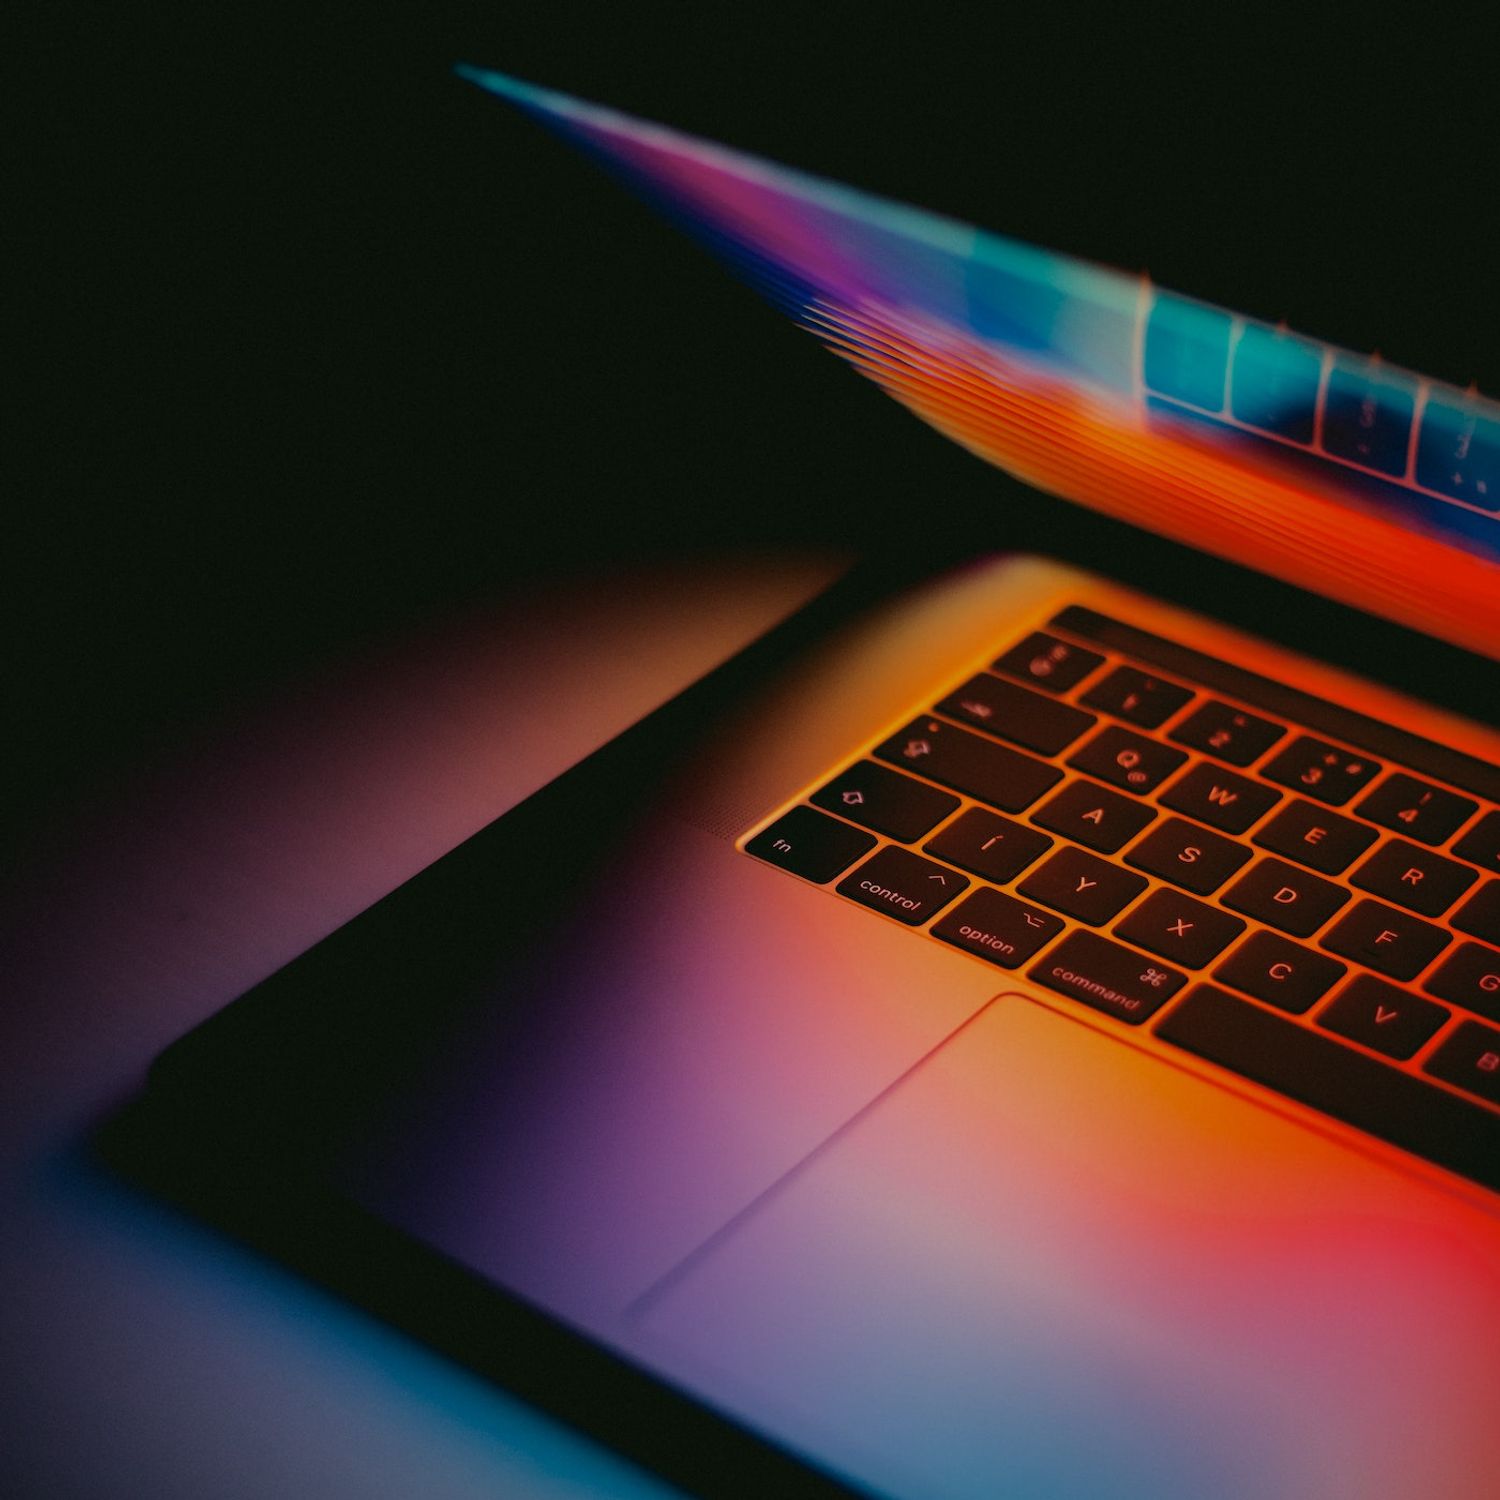 A macbook laptop glows neon orange